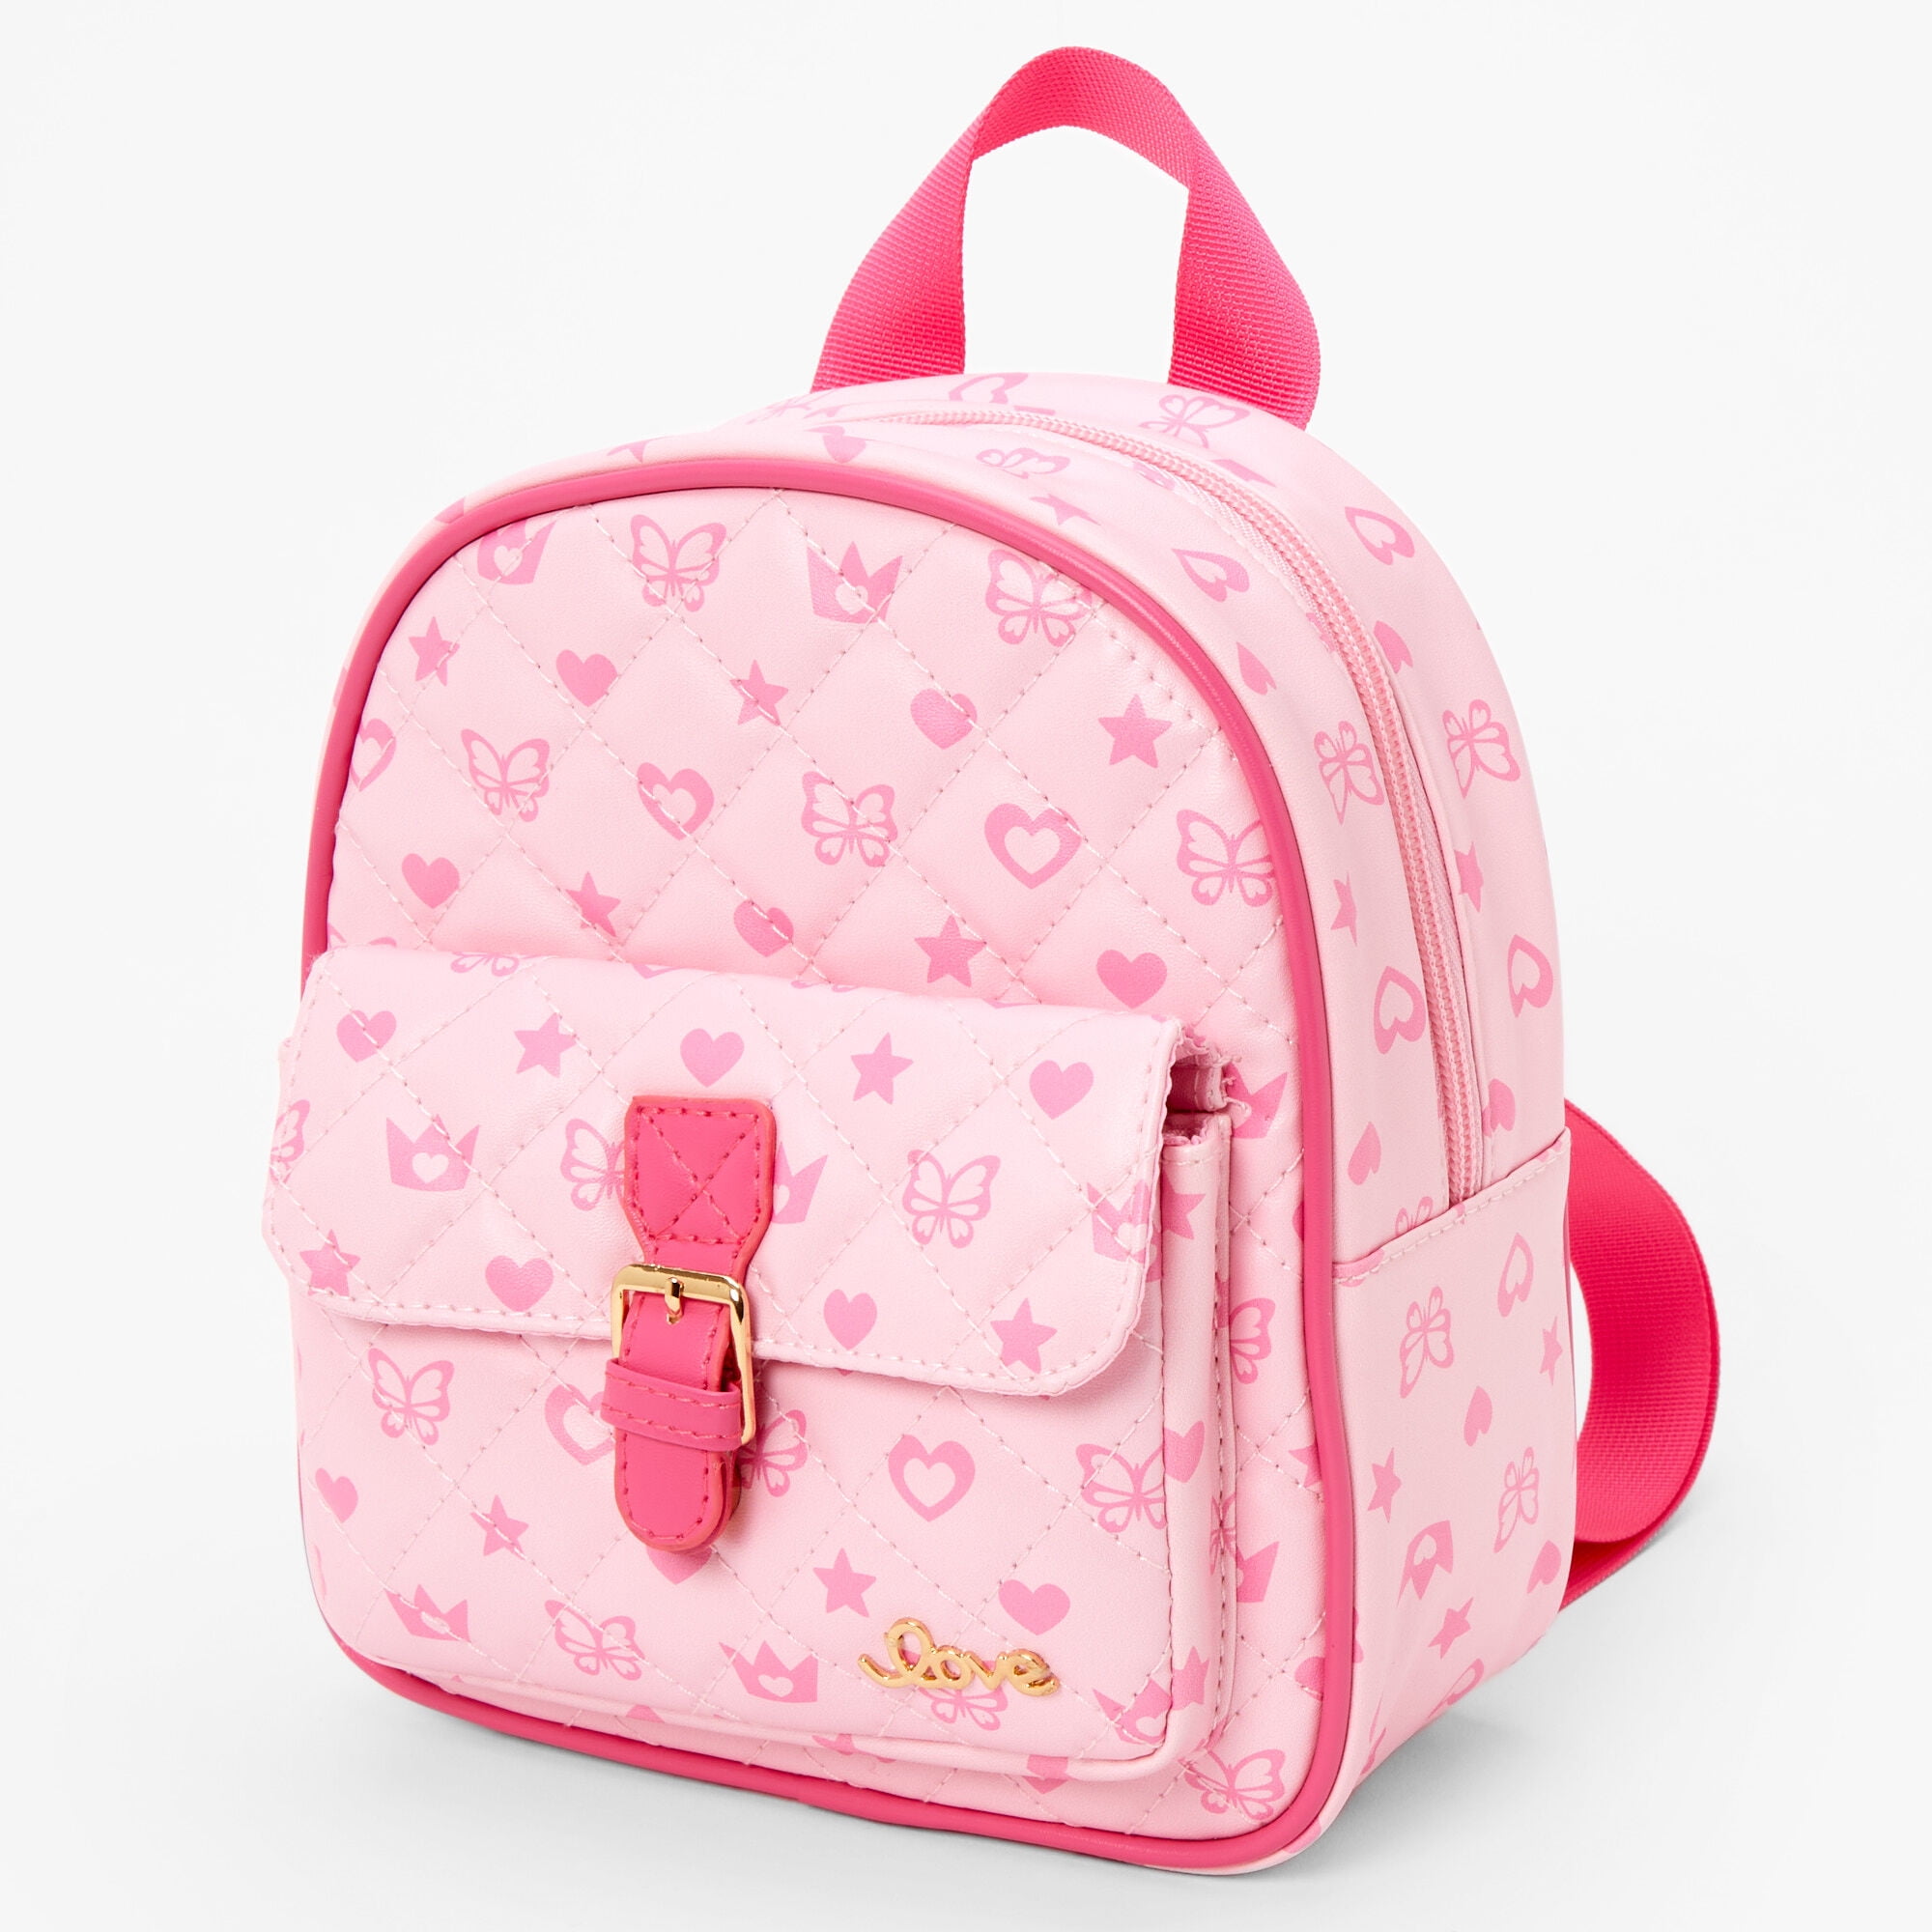 CLUCI Kids Backpack for Elementary School Girls Backpack Toddler